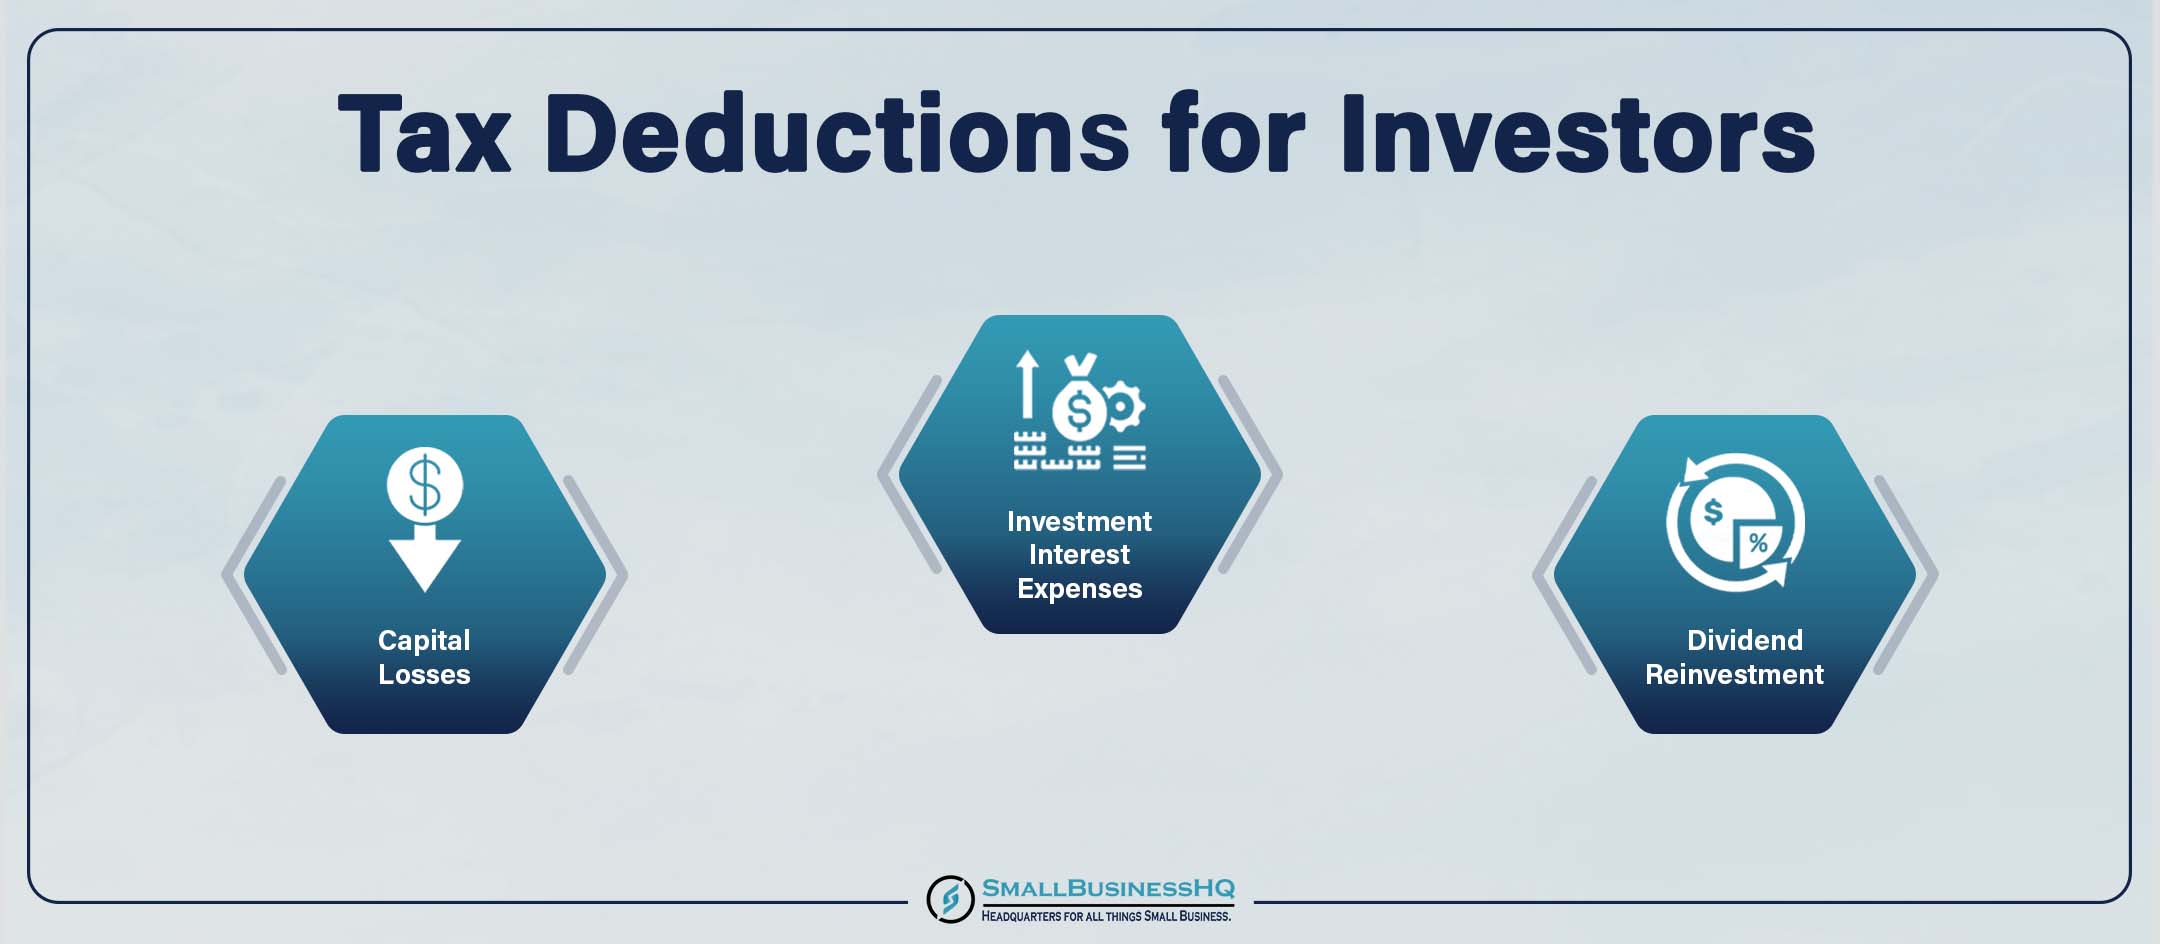 Tax Deductions for Investors